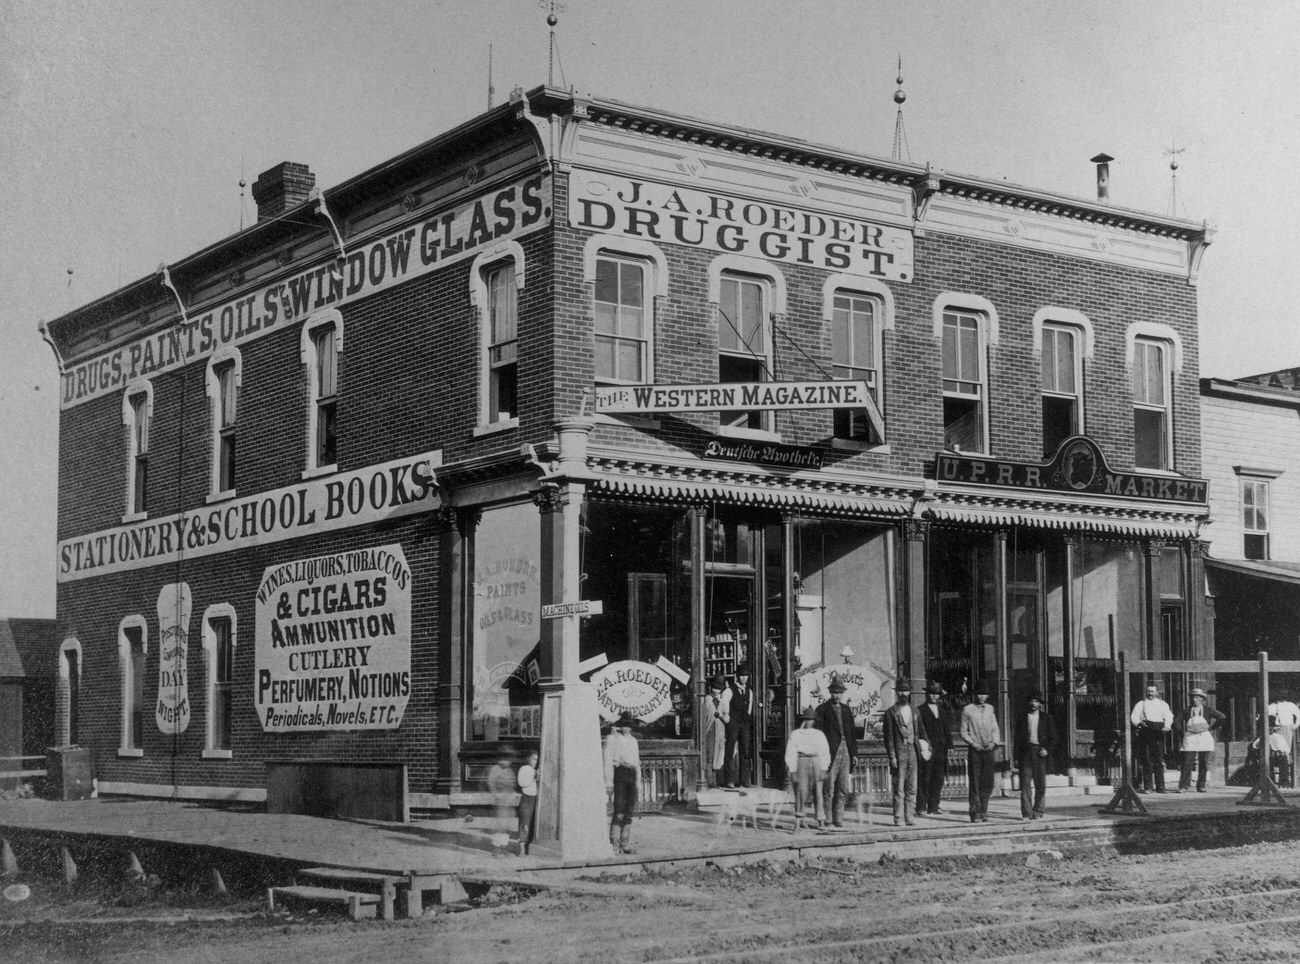 J.A. Roeder Druggist Store, Omaha, Nebraska, 1900s